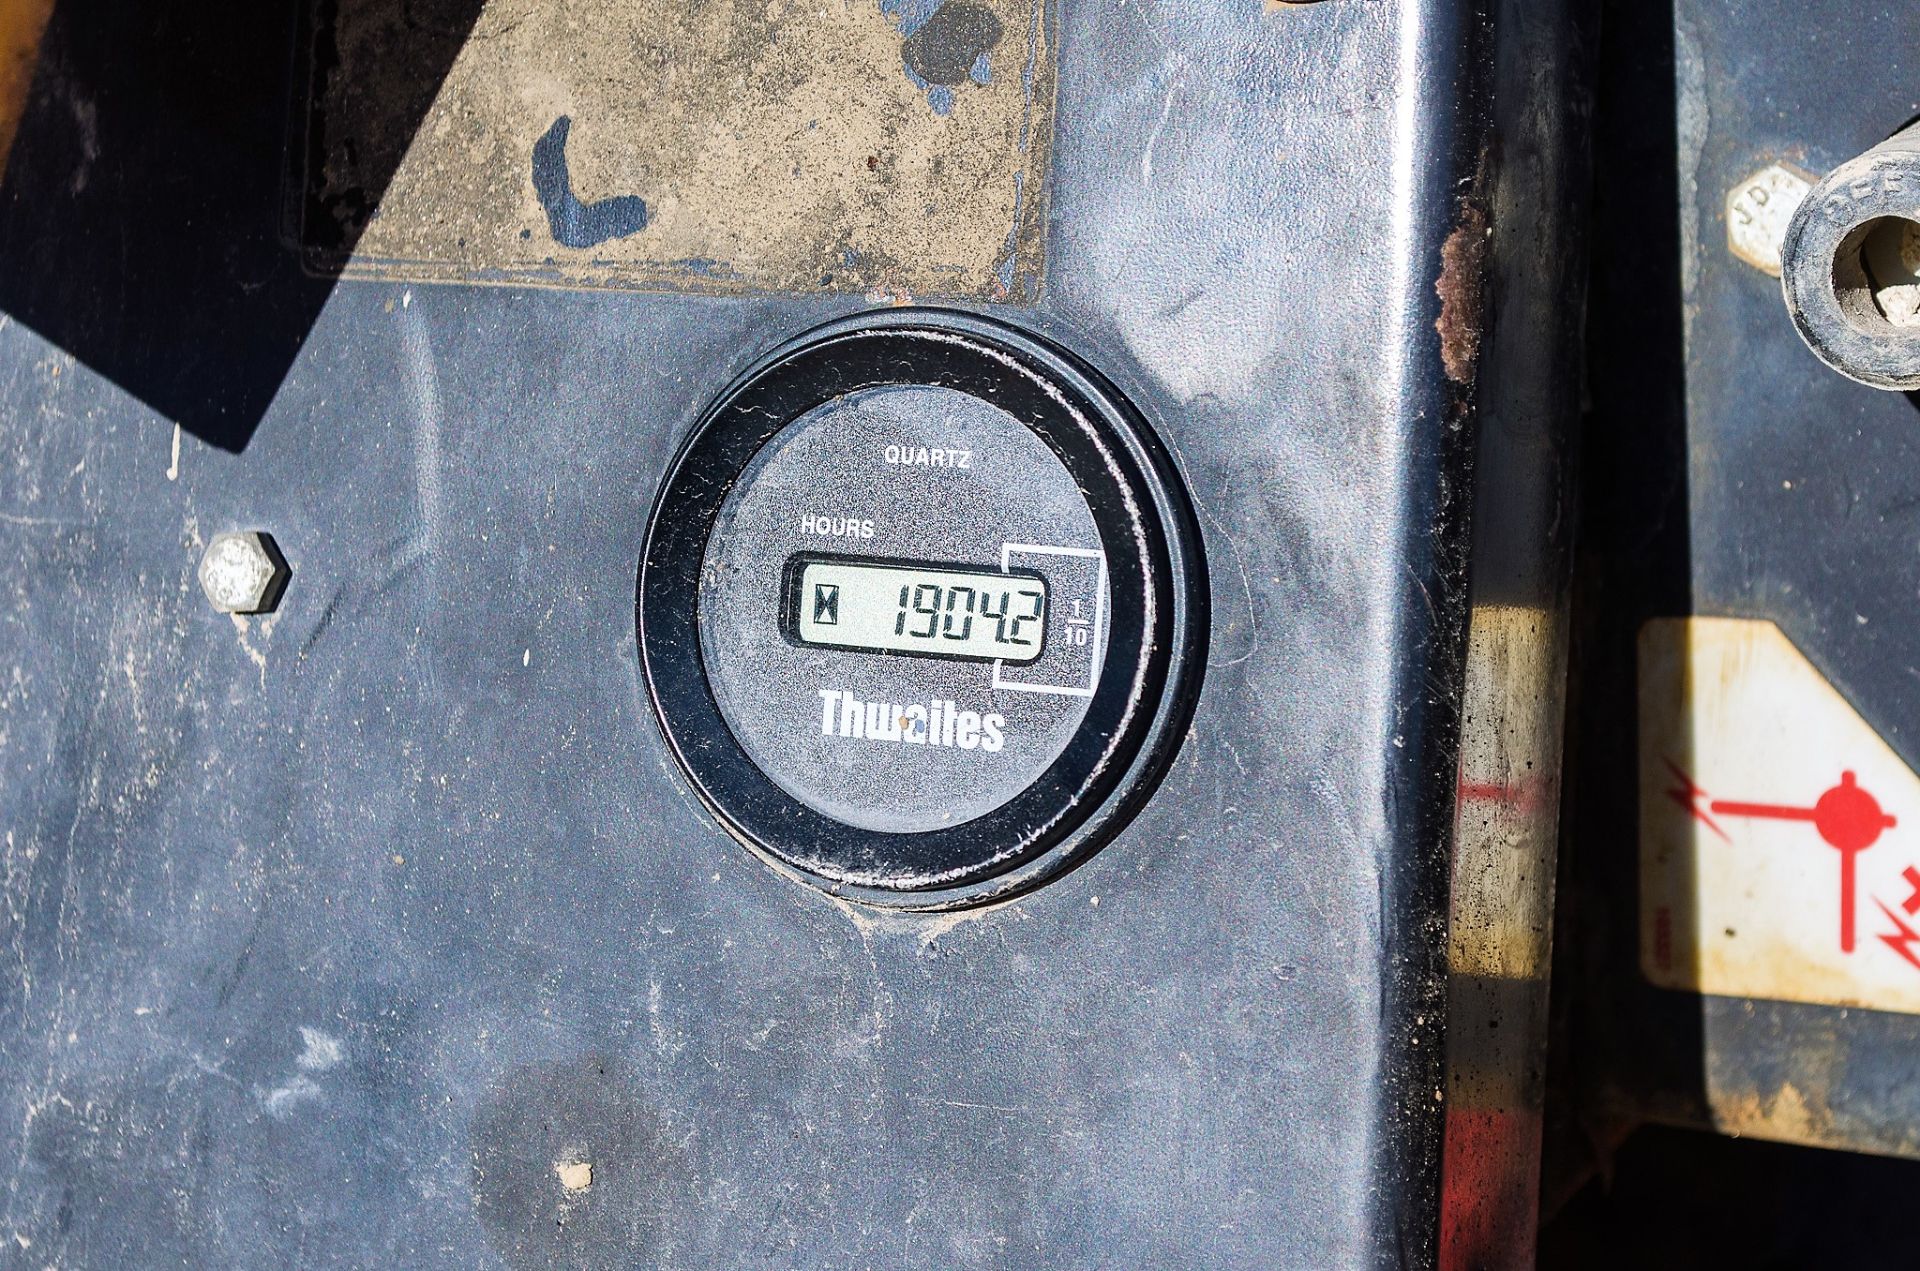 Thwaites 3 tonne swivel skip dumper  Year: 2013 S/N: C5134 Recorded Hours: 1903 ** Engine - Image 18 of 20